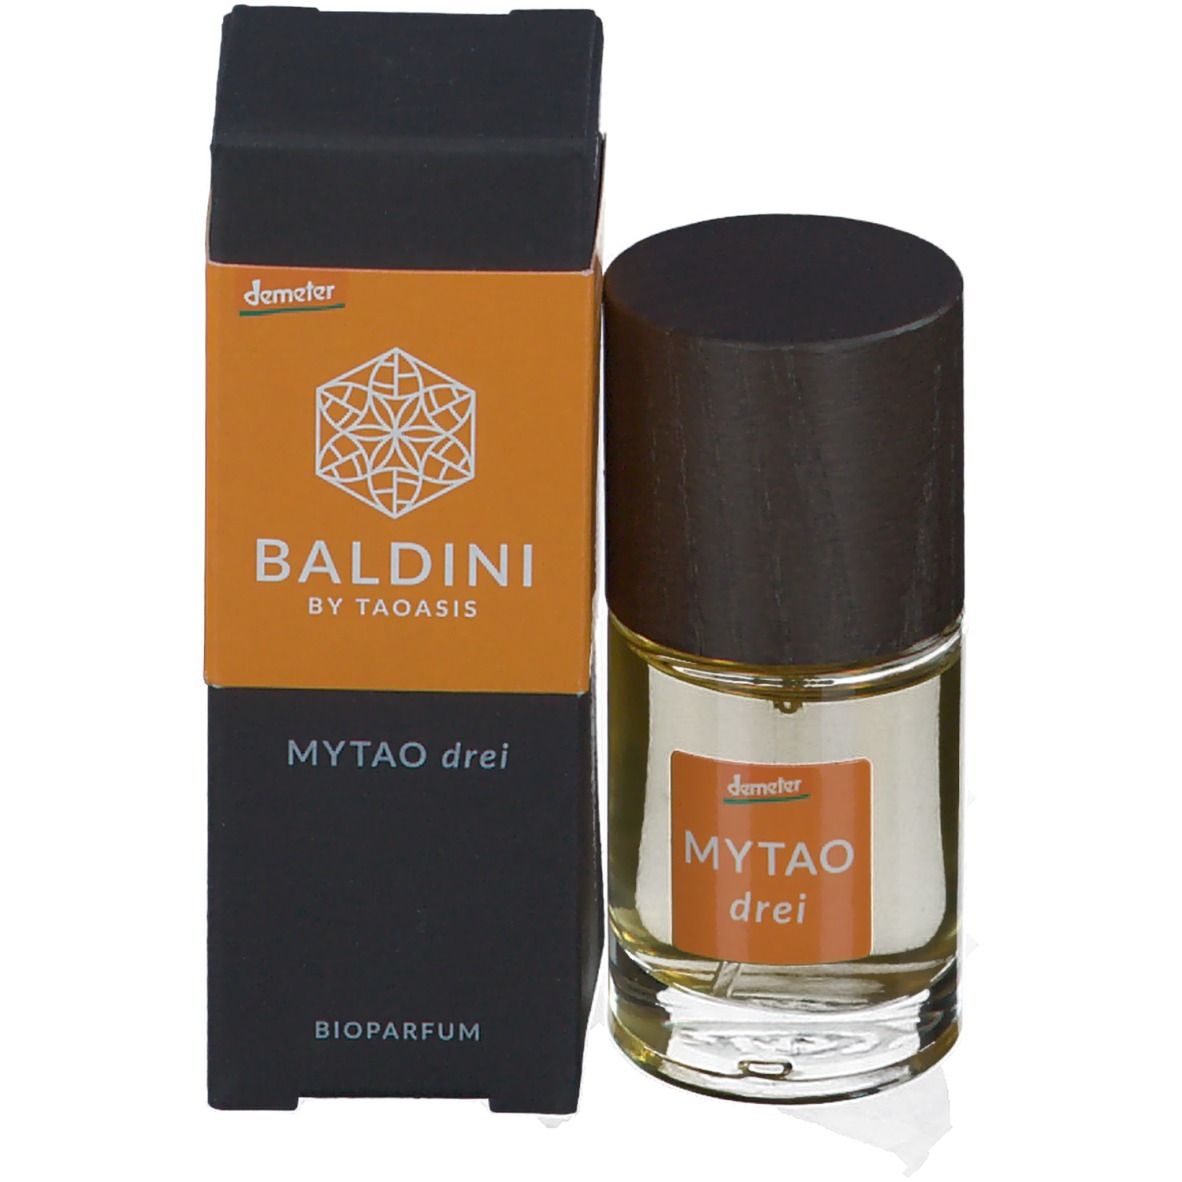 BALDINI BY TAOASIS MYTAO drei Bioparfum